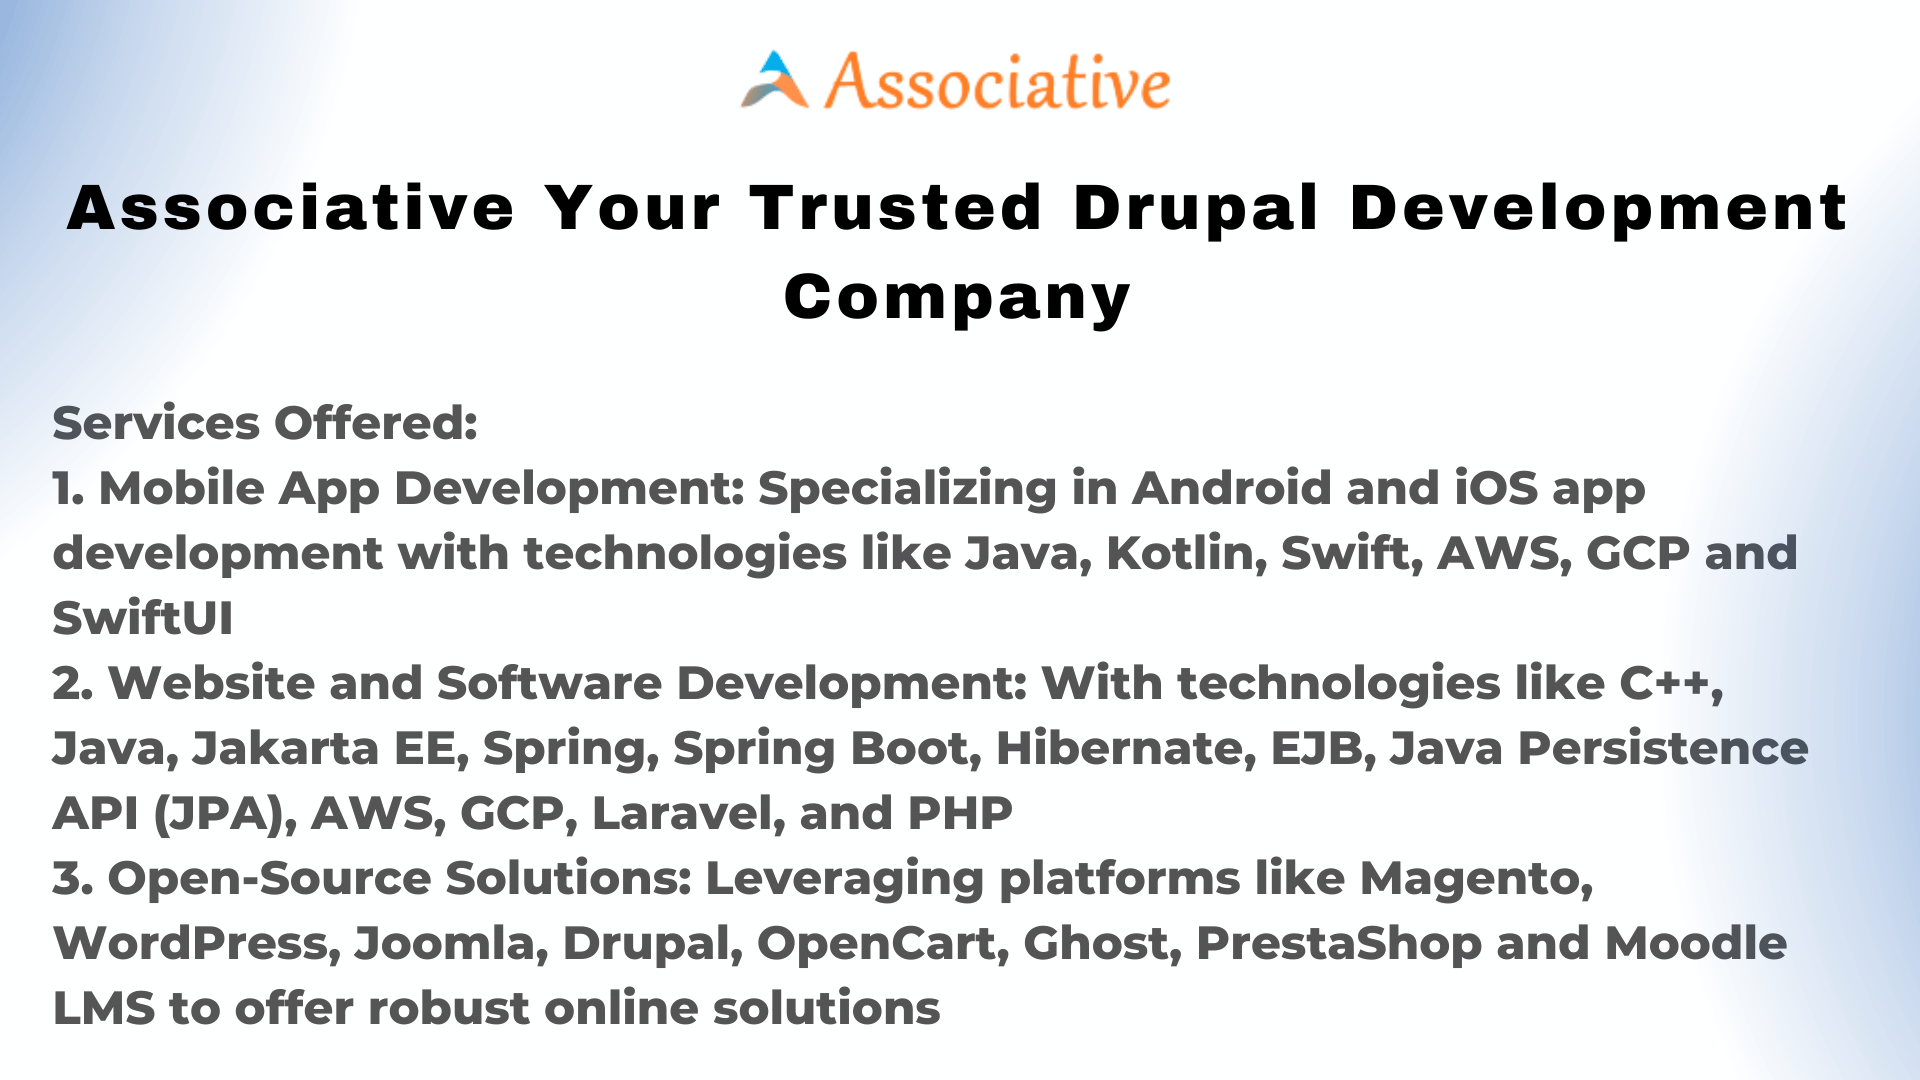 Associative Your Trusted Drupal Development Company